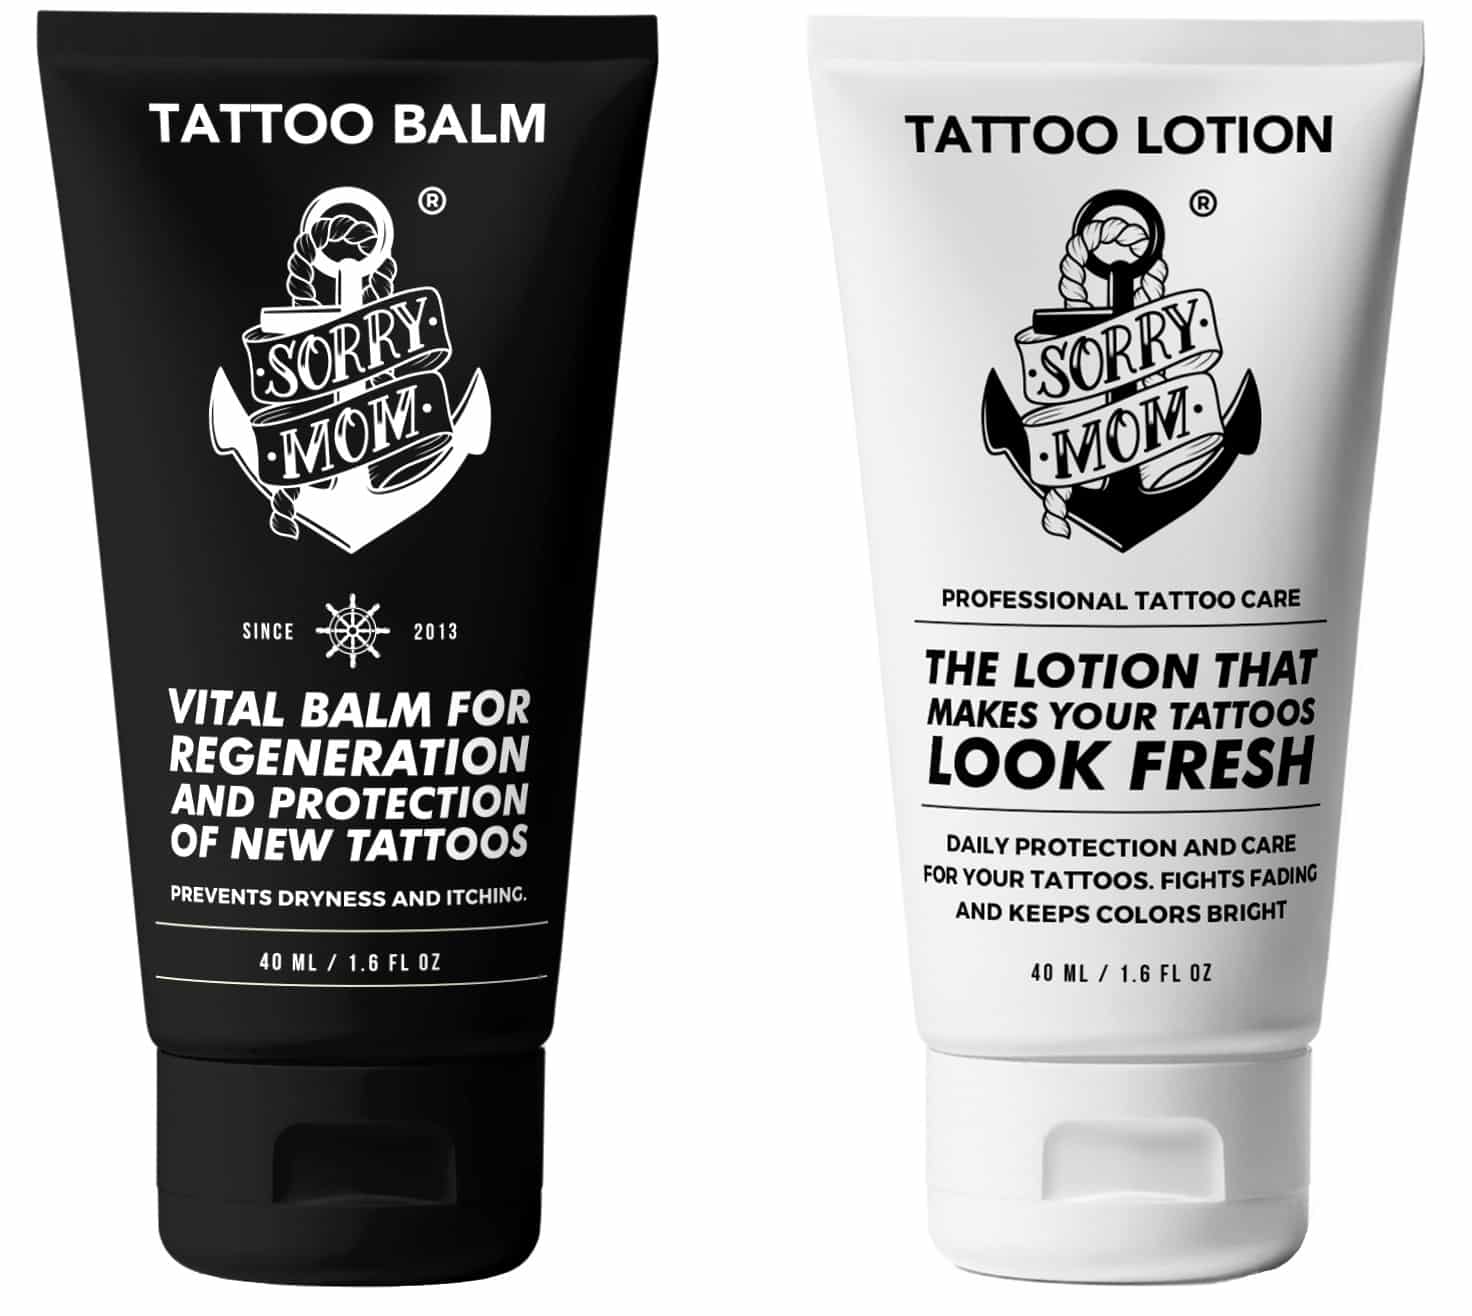 Balm + Lotion Tattoo Pack - 2ndface - Salon Tatuaje & Piercing Bucuresti